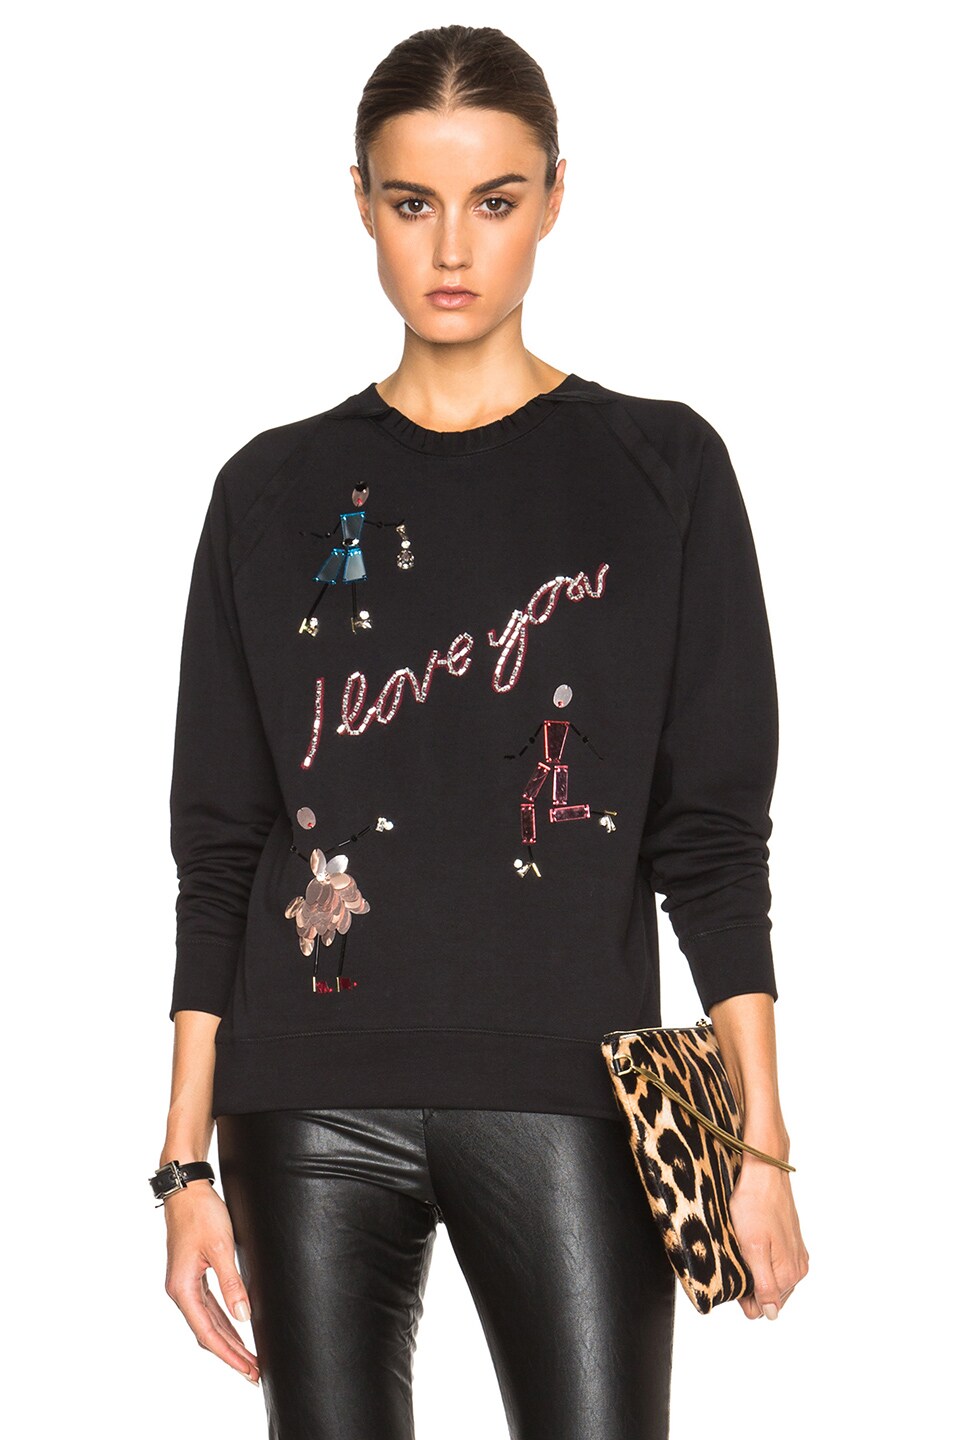 Lanvin I Love You Embroidered Sweatshirt in Black | FWRD